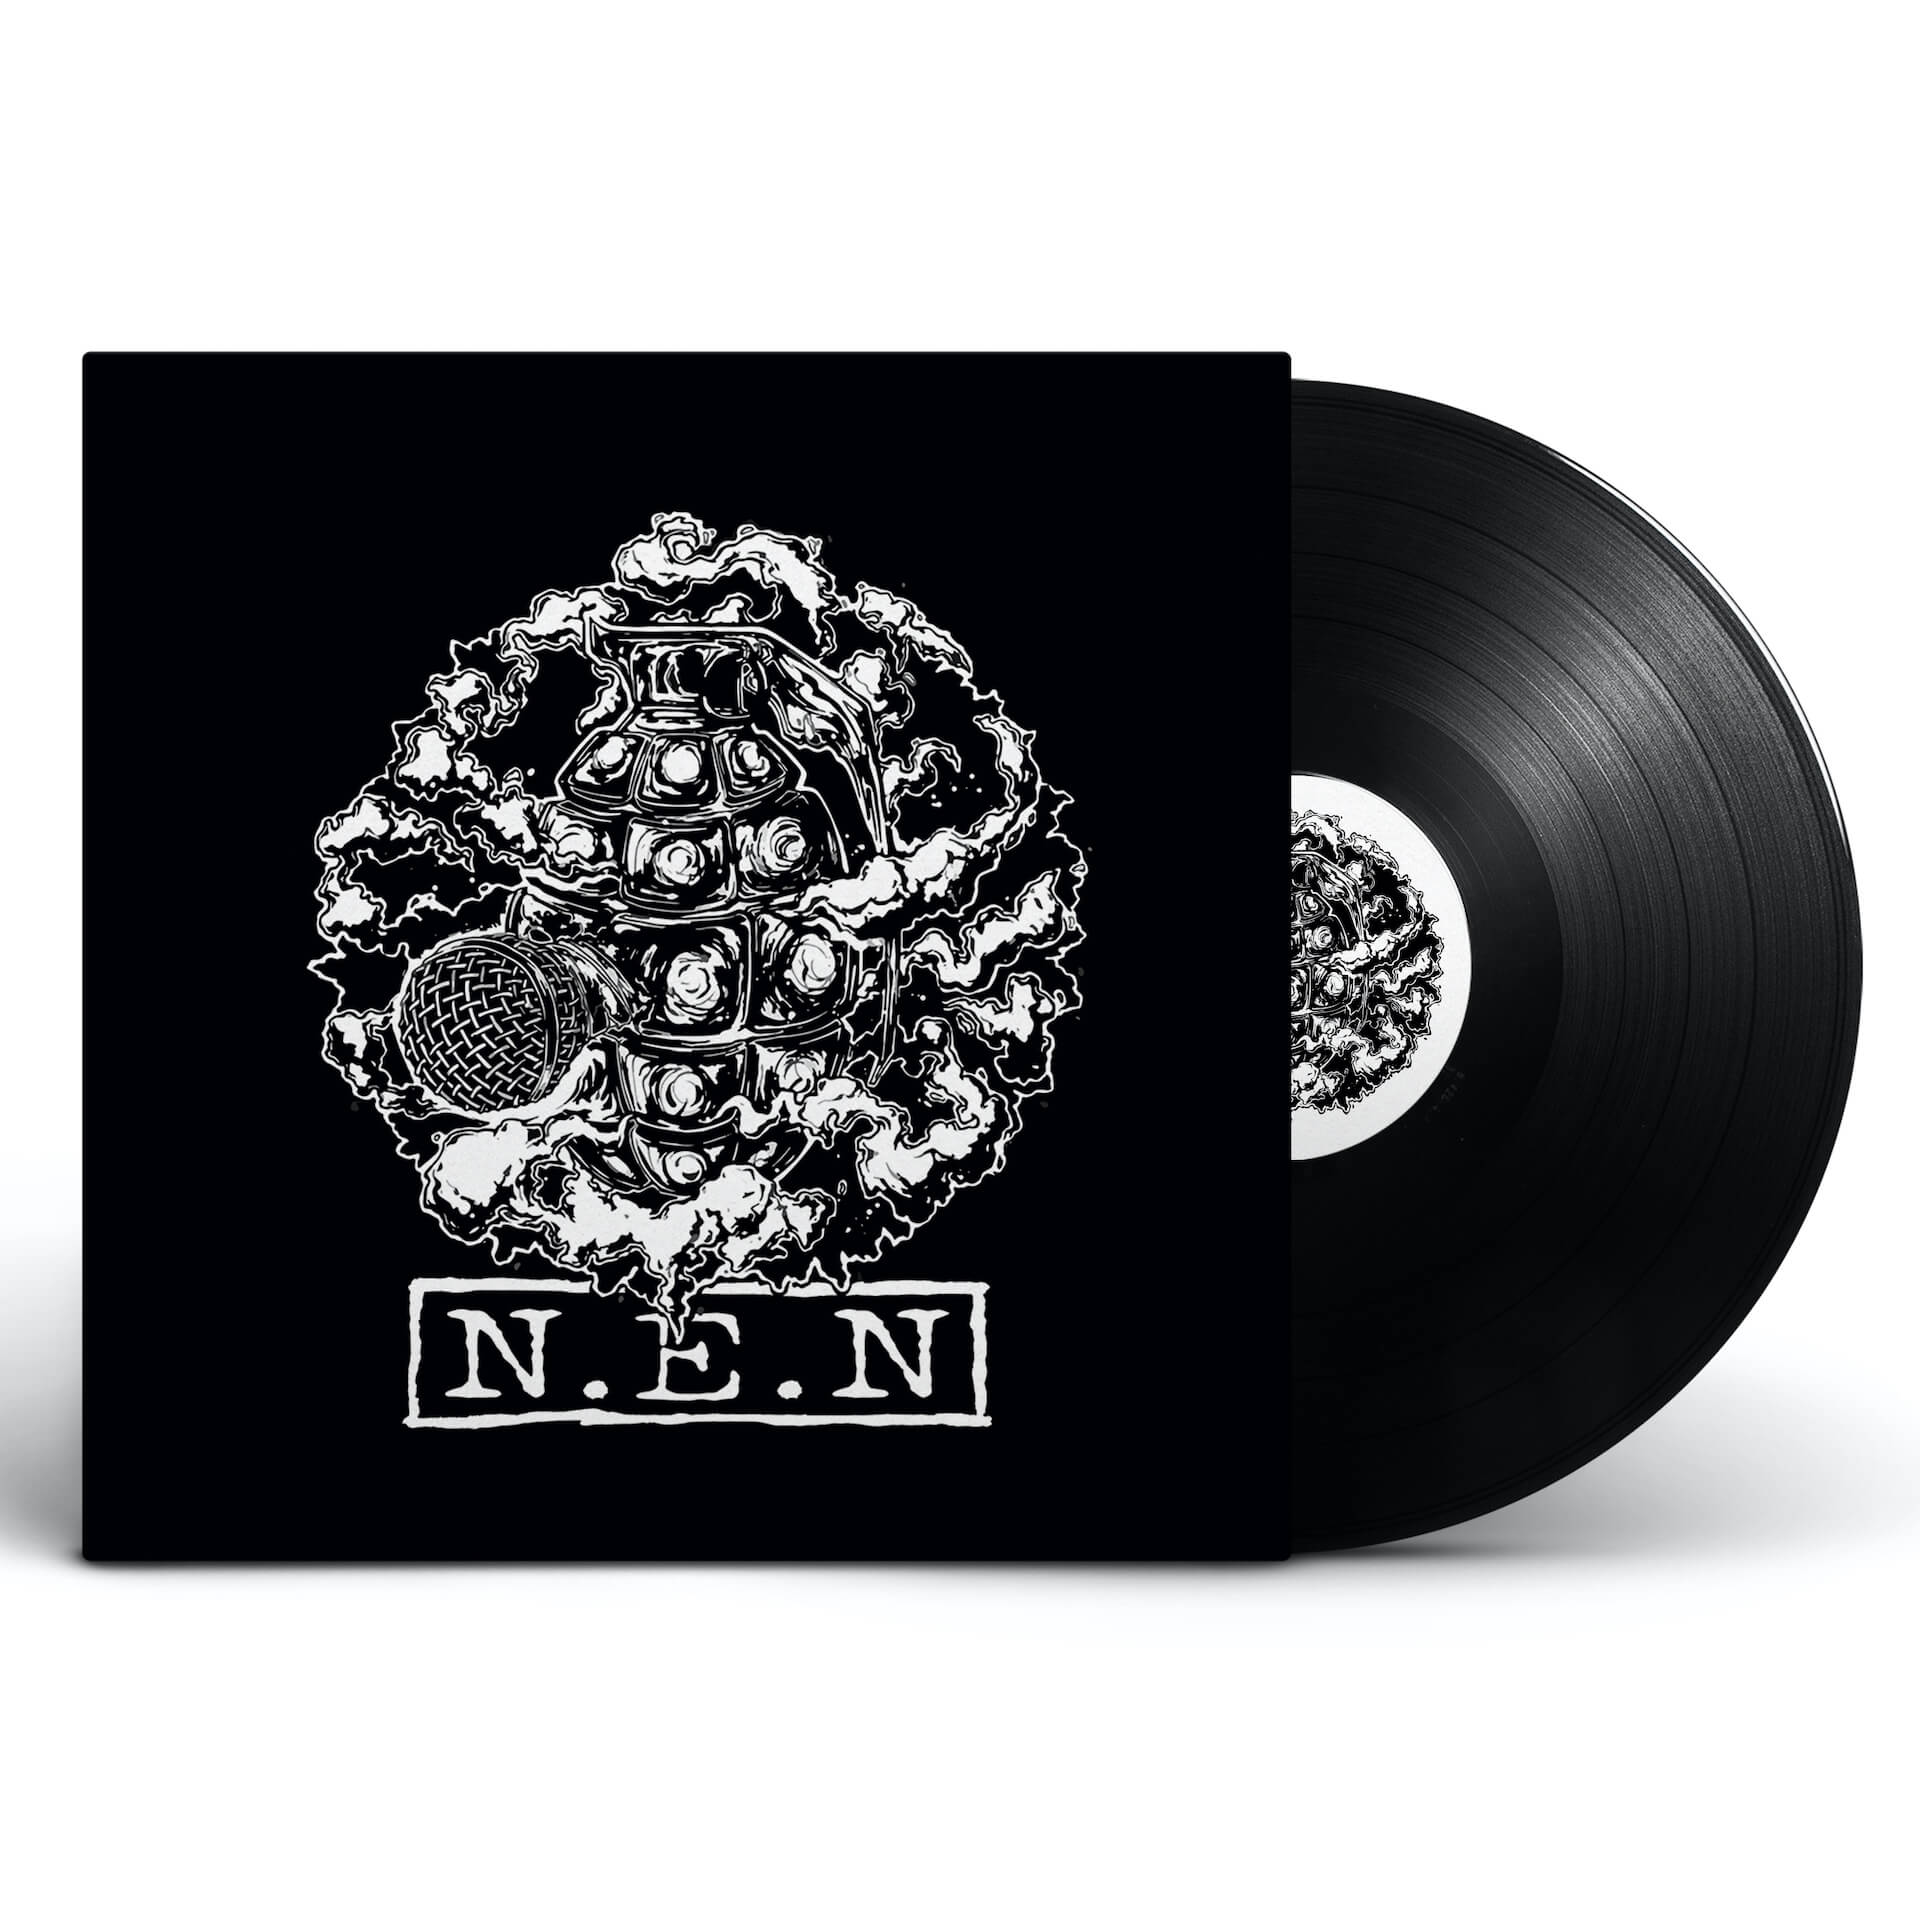 N.E.Nが1stアルバム『N.E.N』に未収録曲＆BONUS TRACKを追加したLP発売を発表！リリース記念イベントも開催 music_210716_NEN9